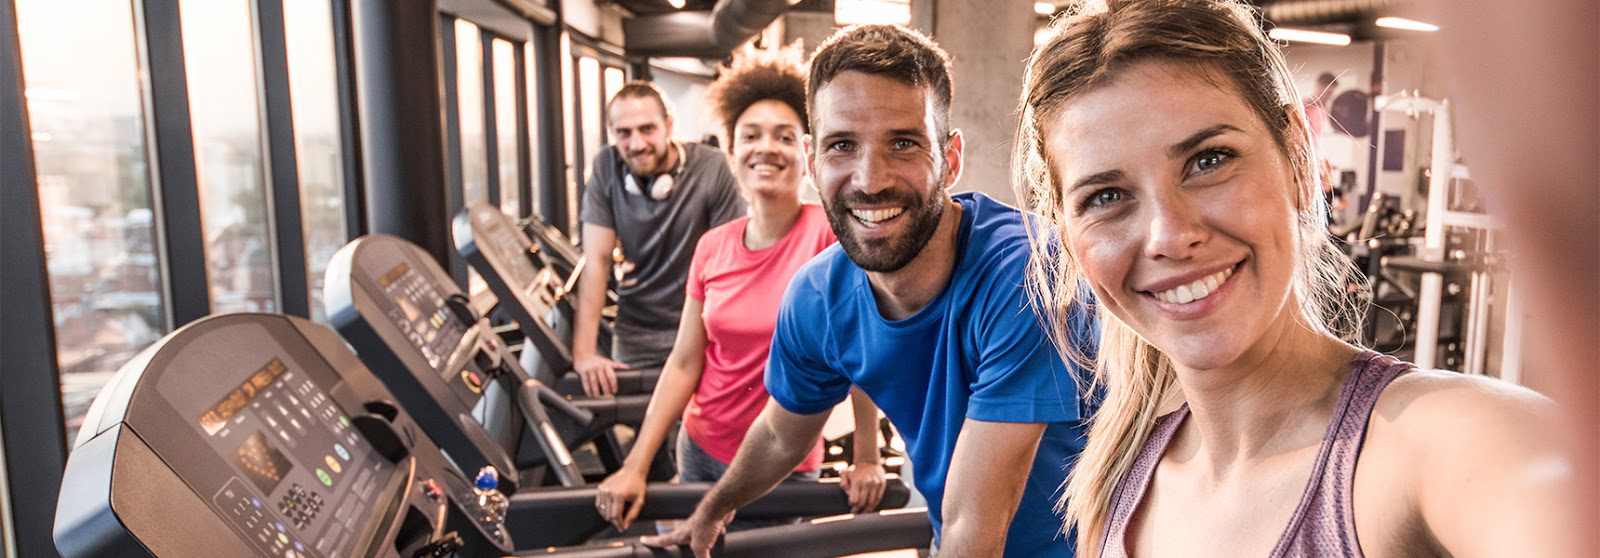 gym members cardio training on treadmills at freedom fitness